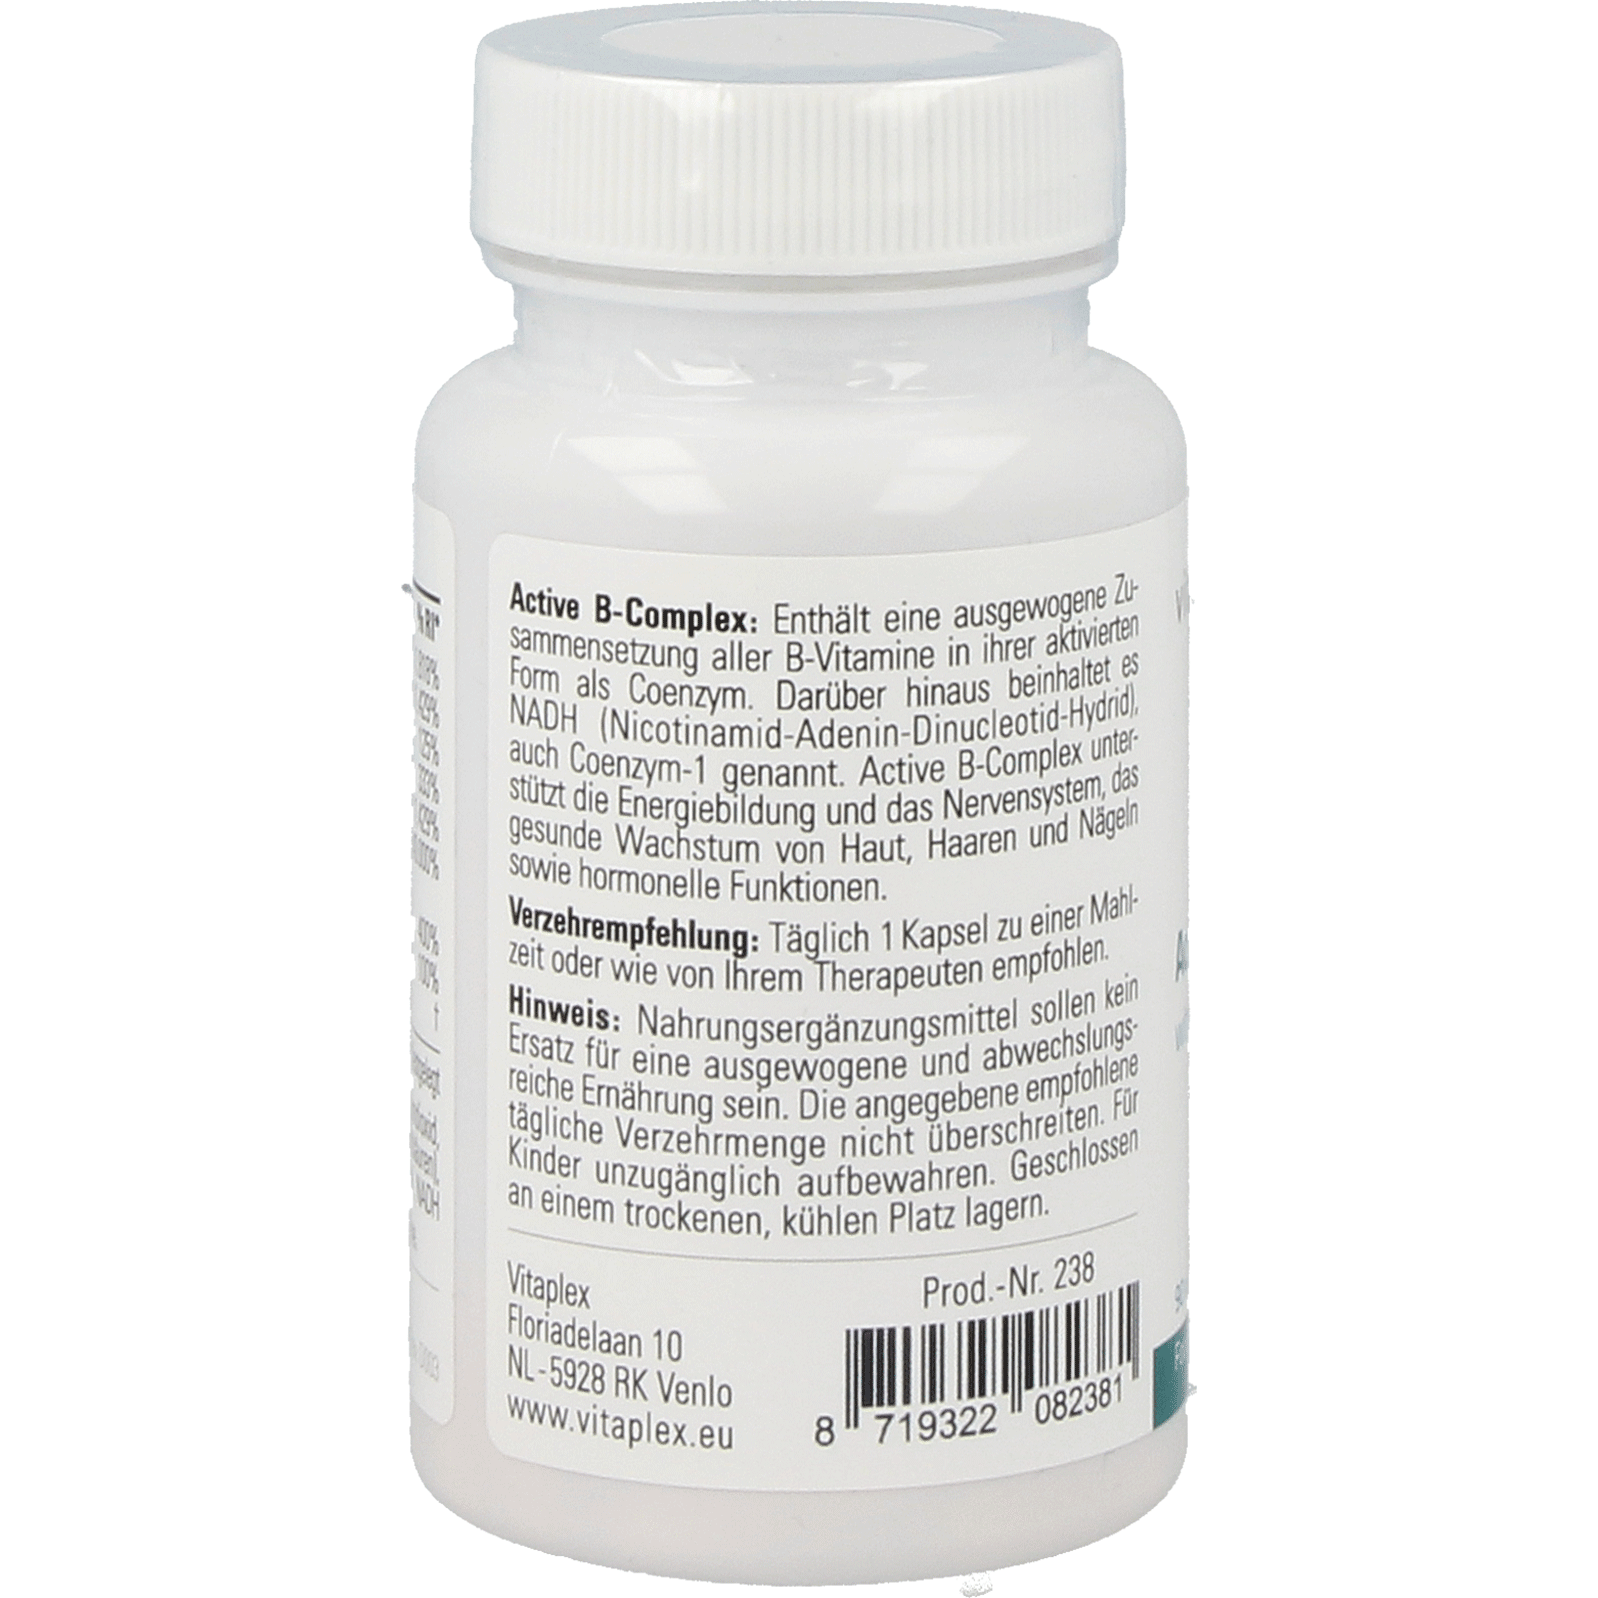 Active B-Complex - littlehealthstore